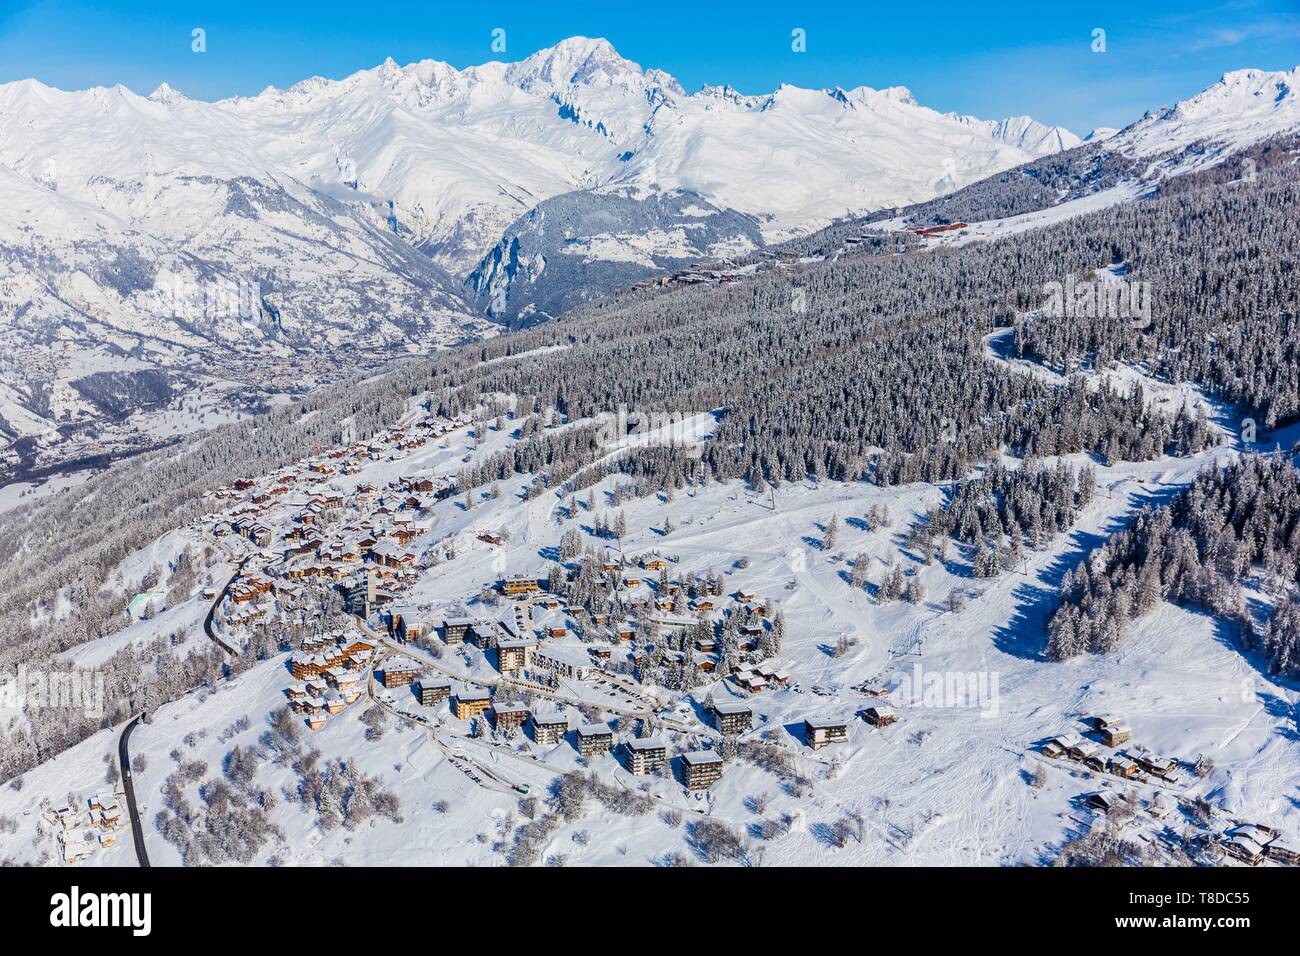 France, Savoie, Vanoise massif, valley of Haute Tarentaise, Peisey-Nancroix, Peisey-Vallandry, part of the Paradiski area, view of the Mont Blanc (4810m), Les Arcs and Bourg-Saint-Maurice (aerial view) Stock Photo